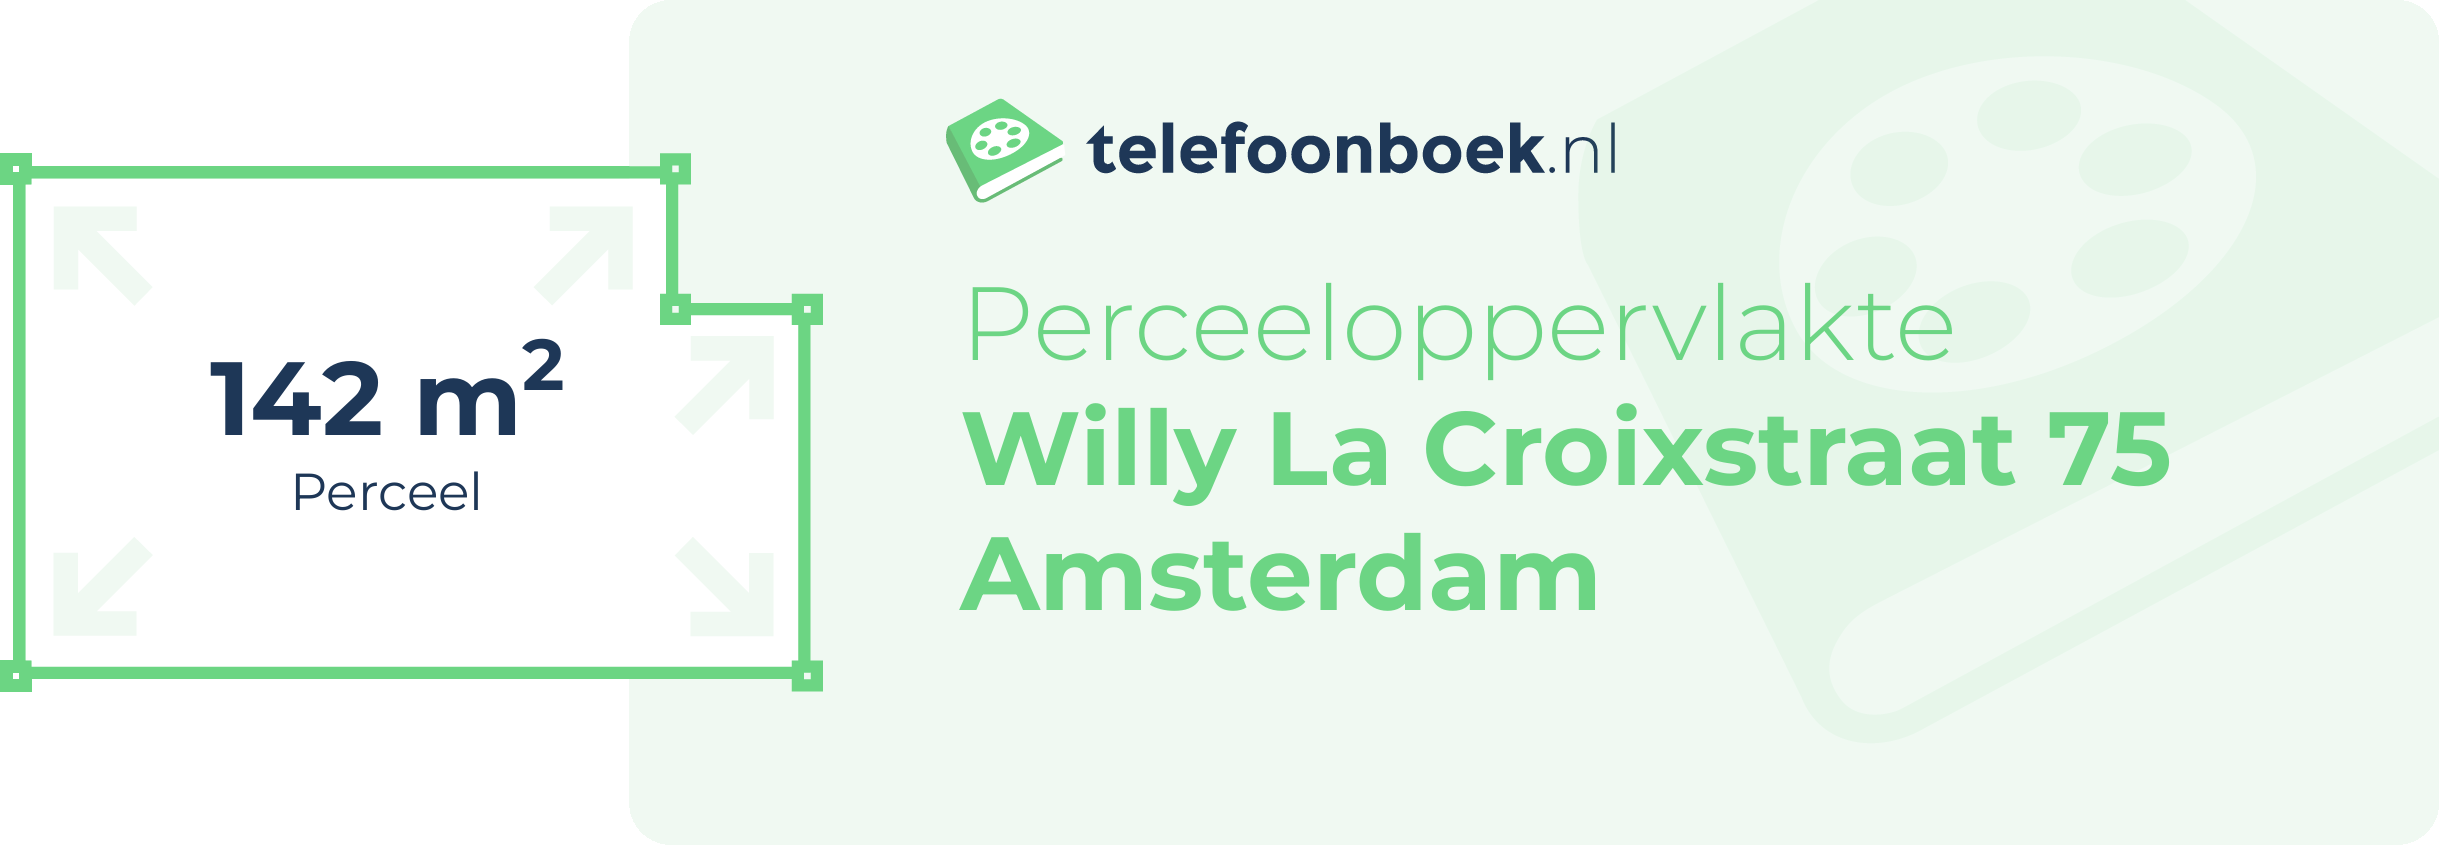 Perceeloppervlakte Willy La Croixstraat 75 Amsterdam